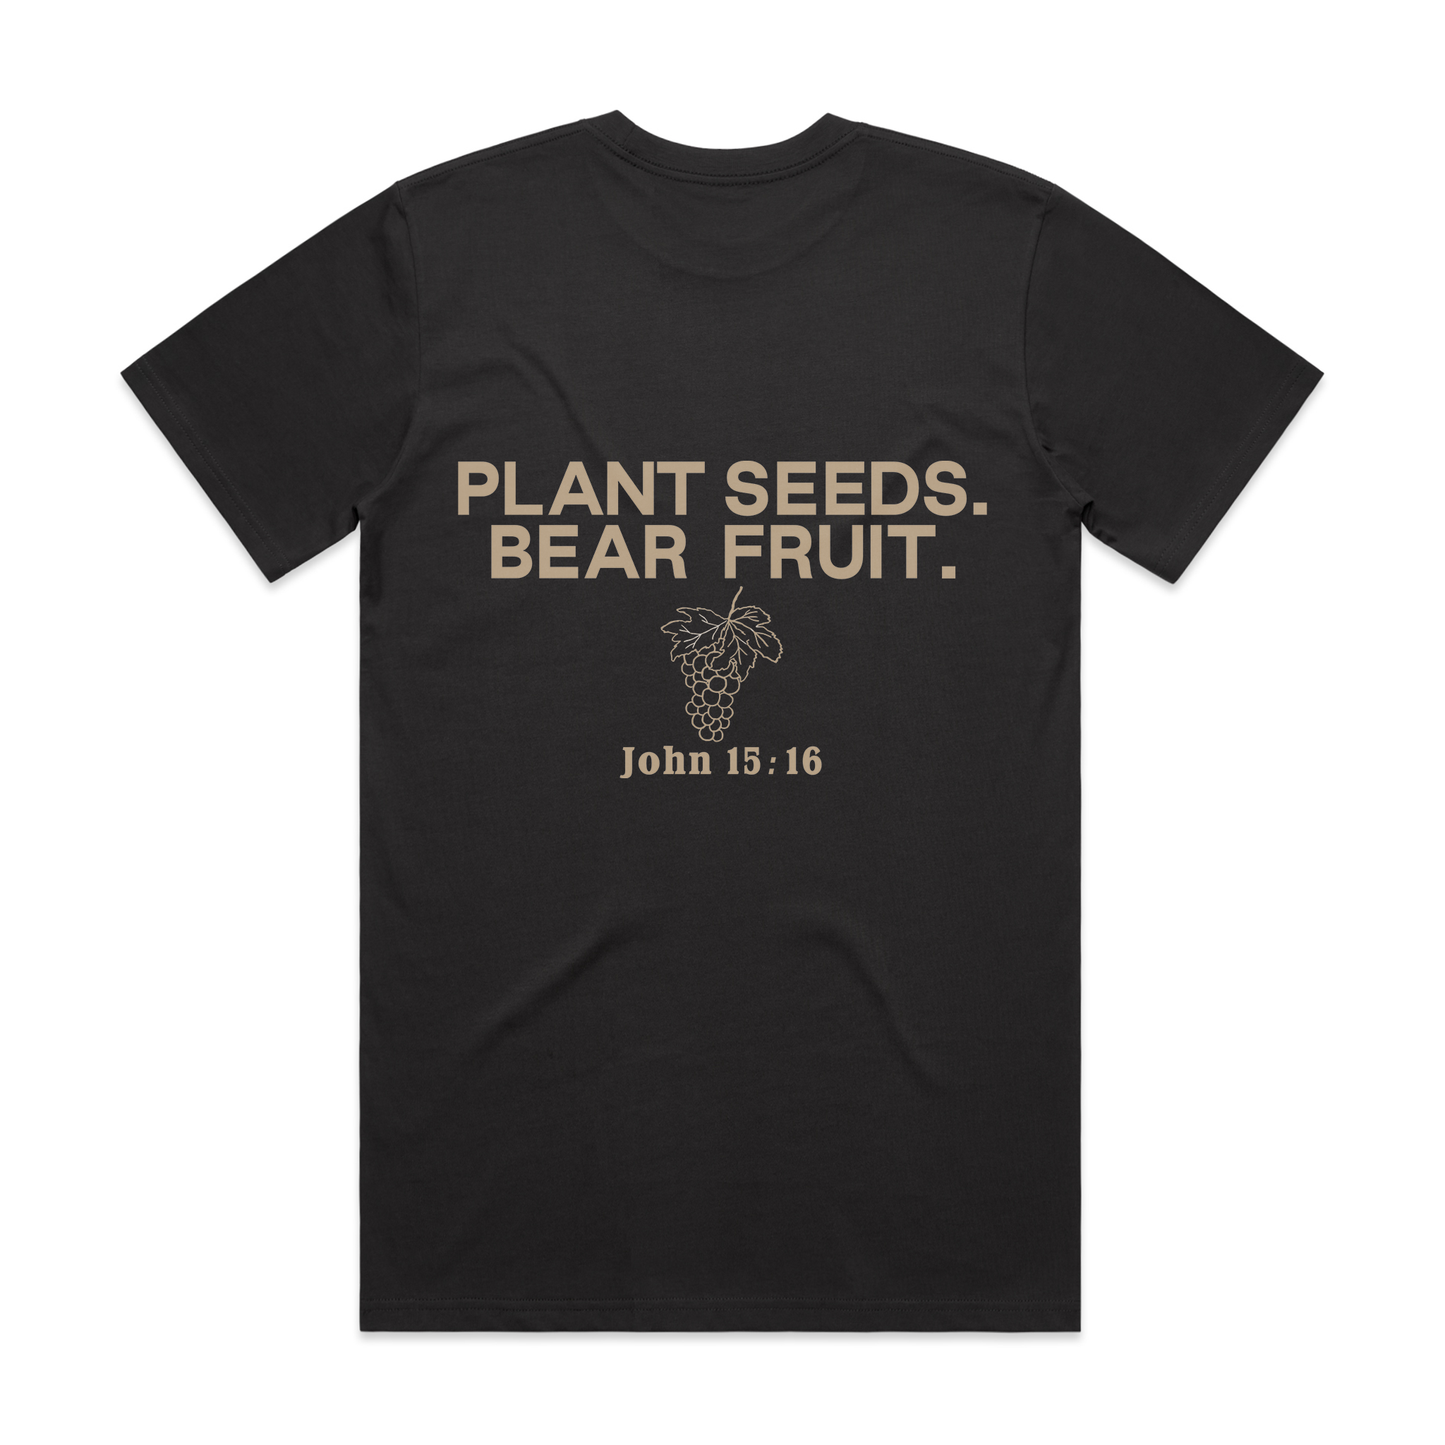 Plant Seeds Tee: Charcoal